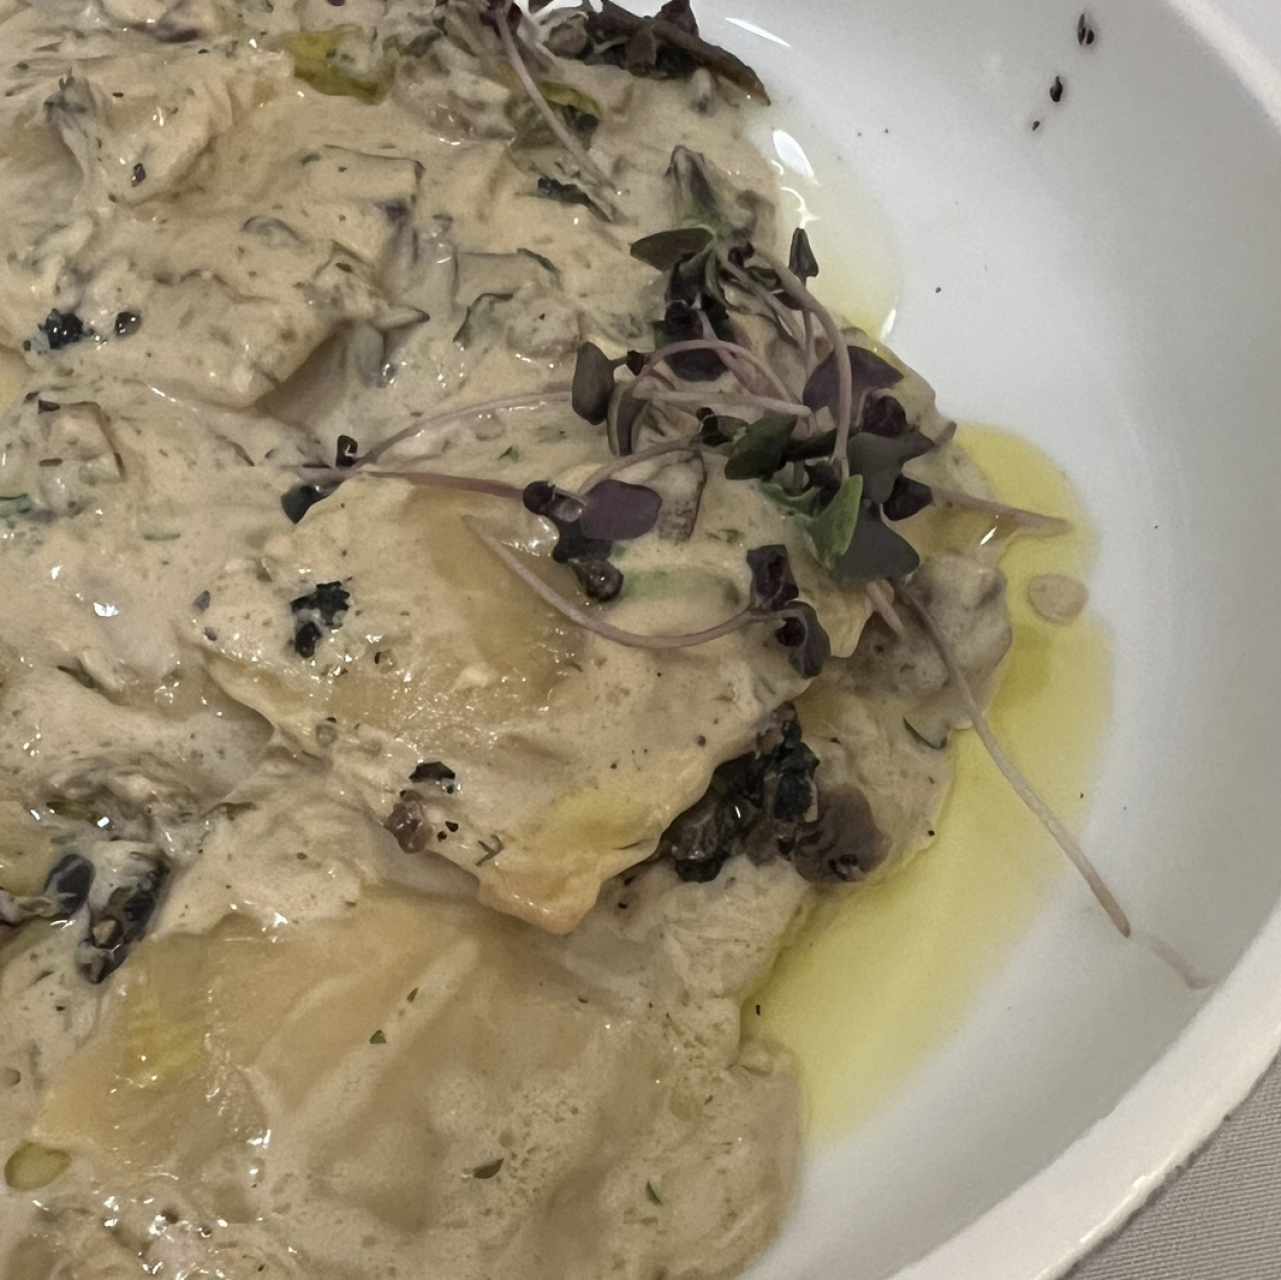 Tortelliini al funghi e tartufo